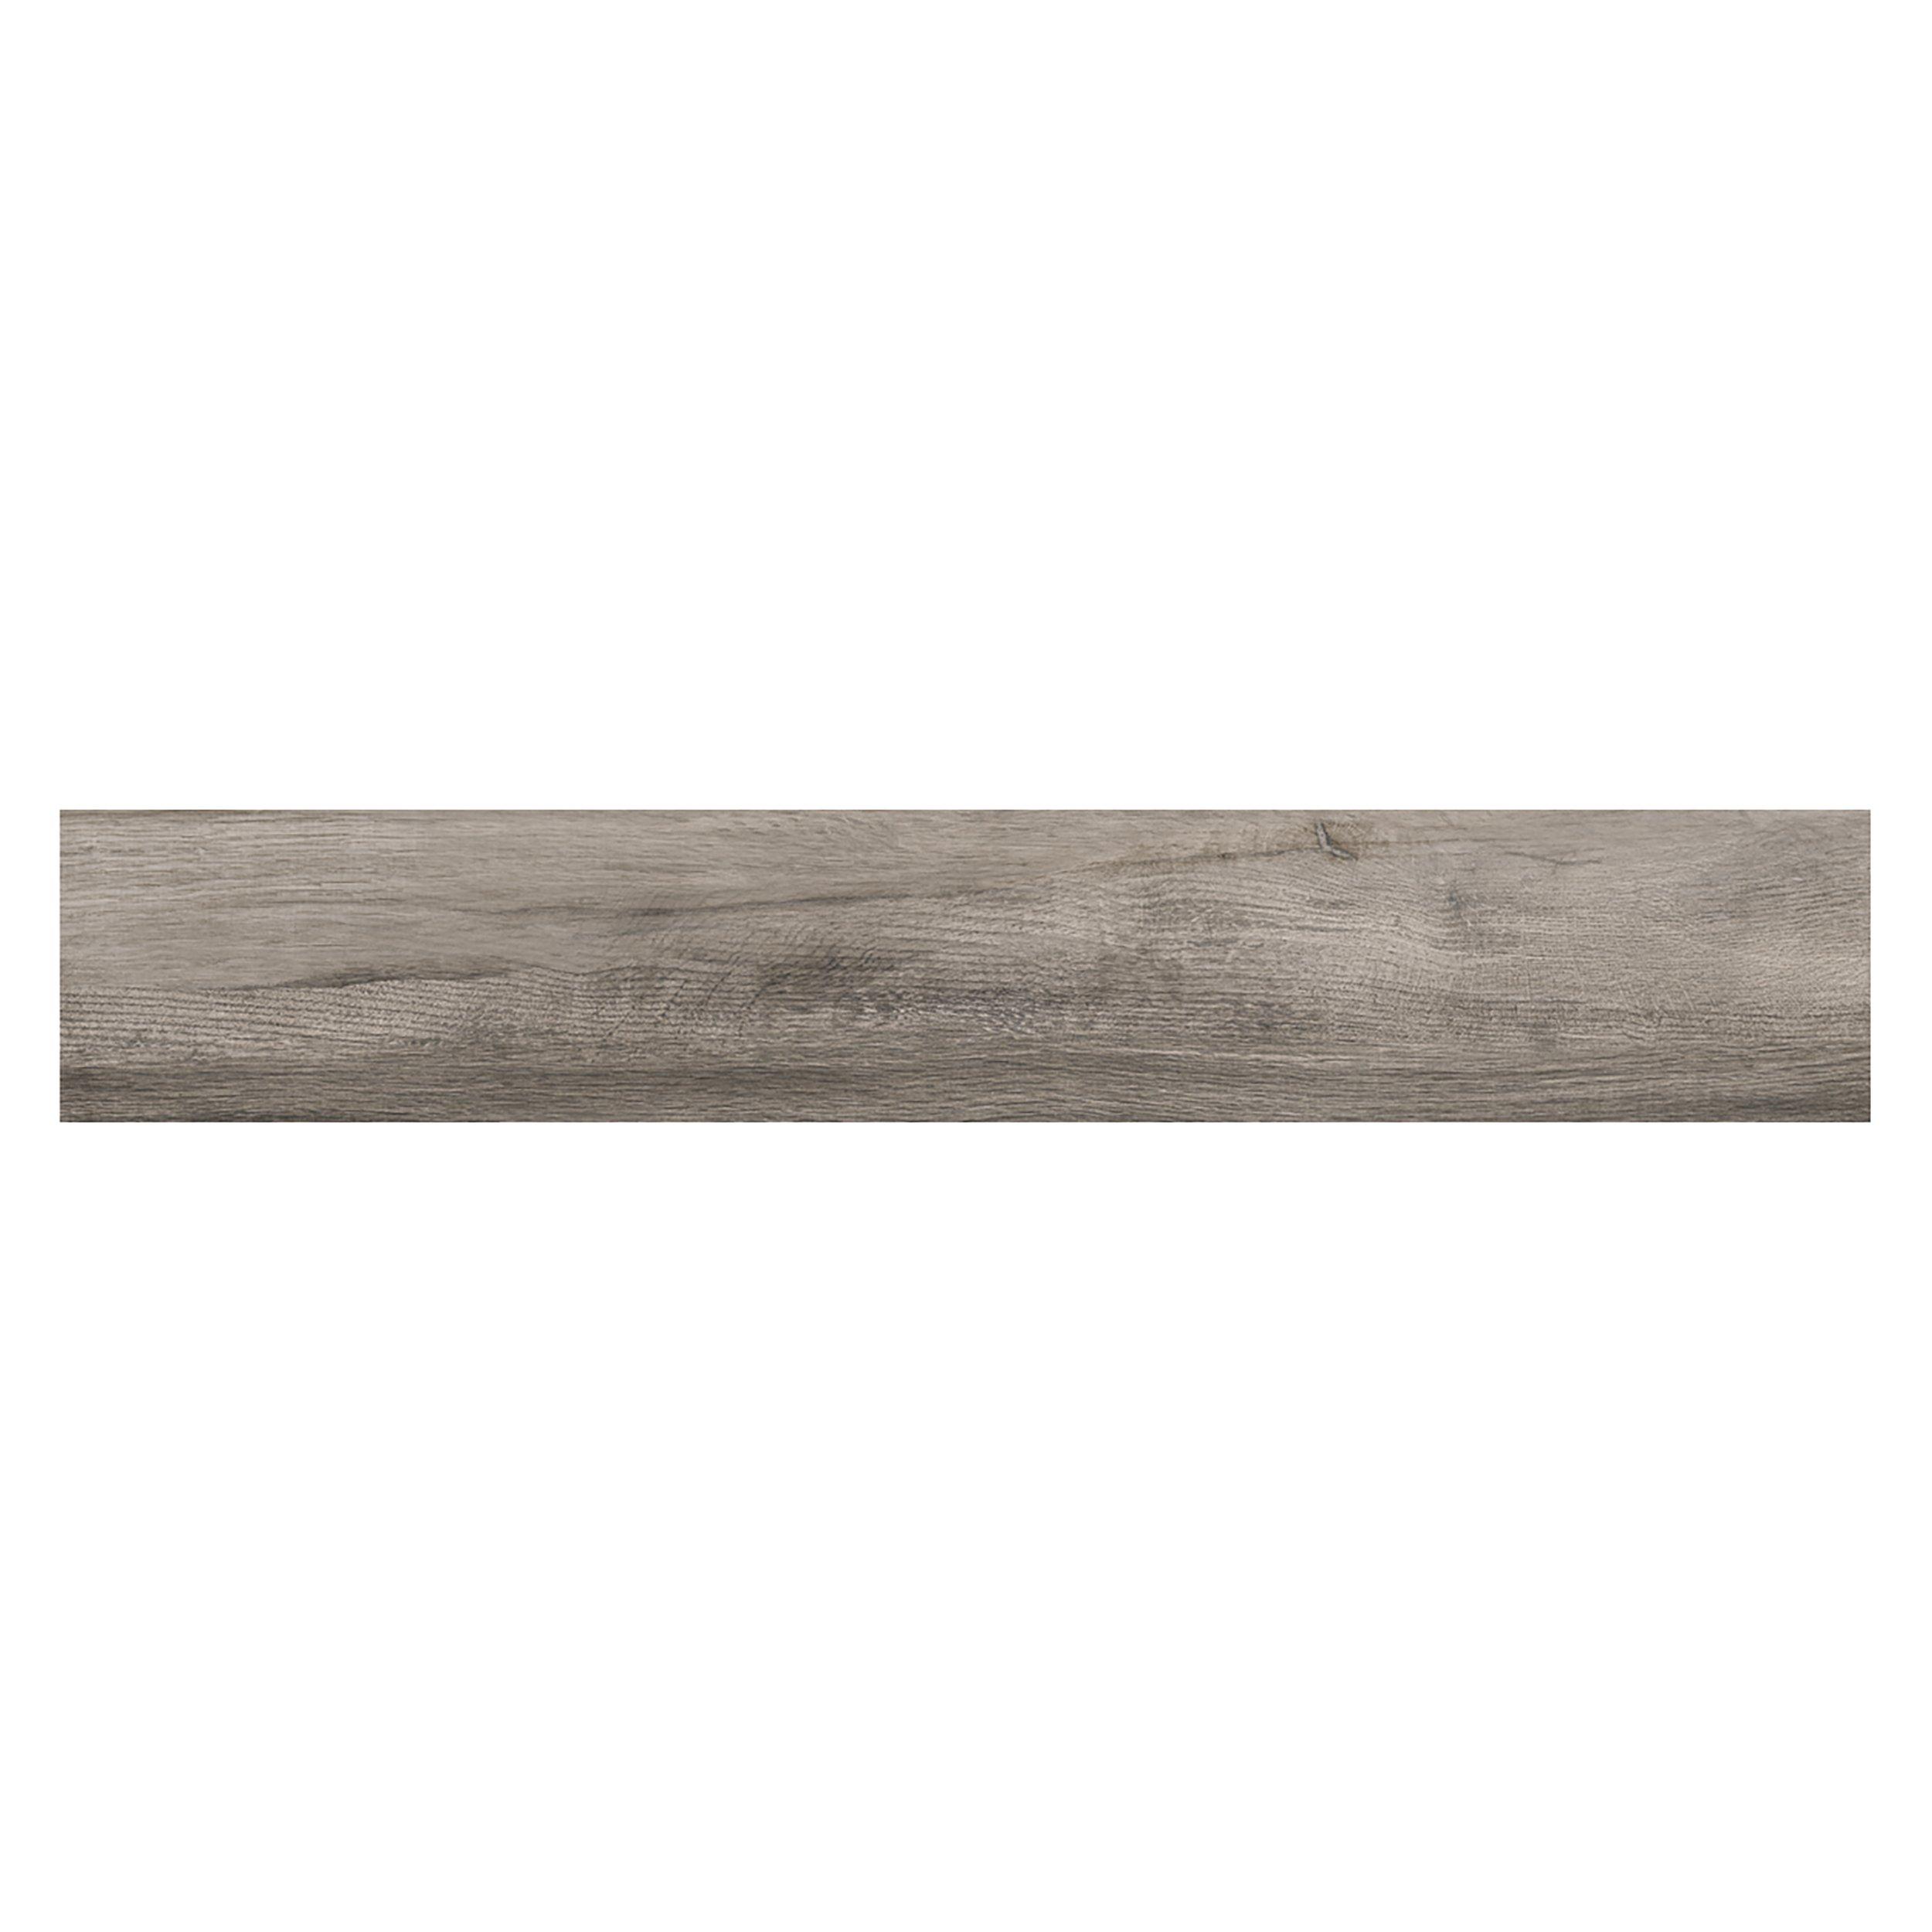 Chesterfield Gray II Wood Plank Ceramic Tile